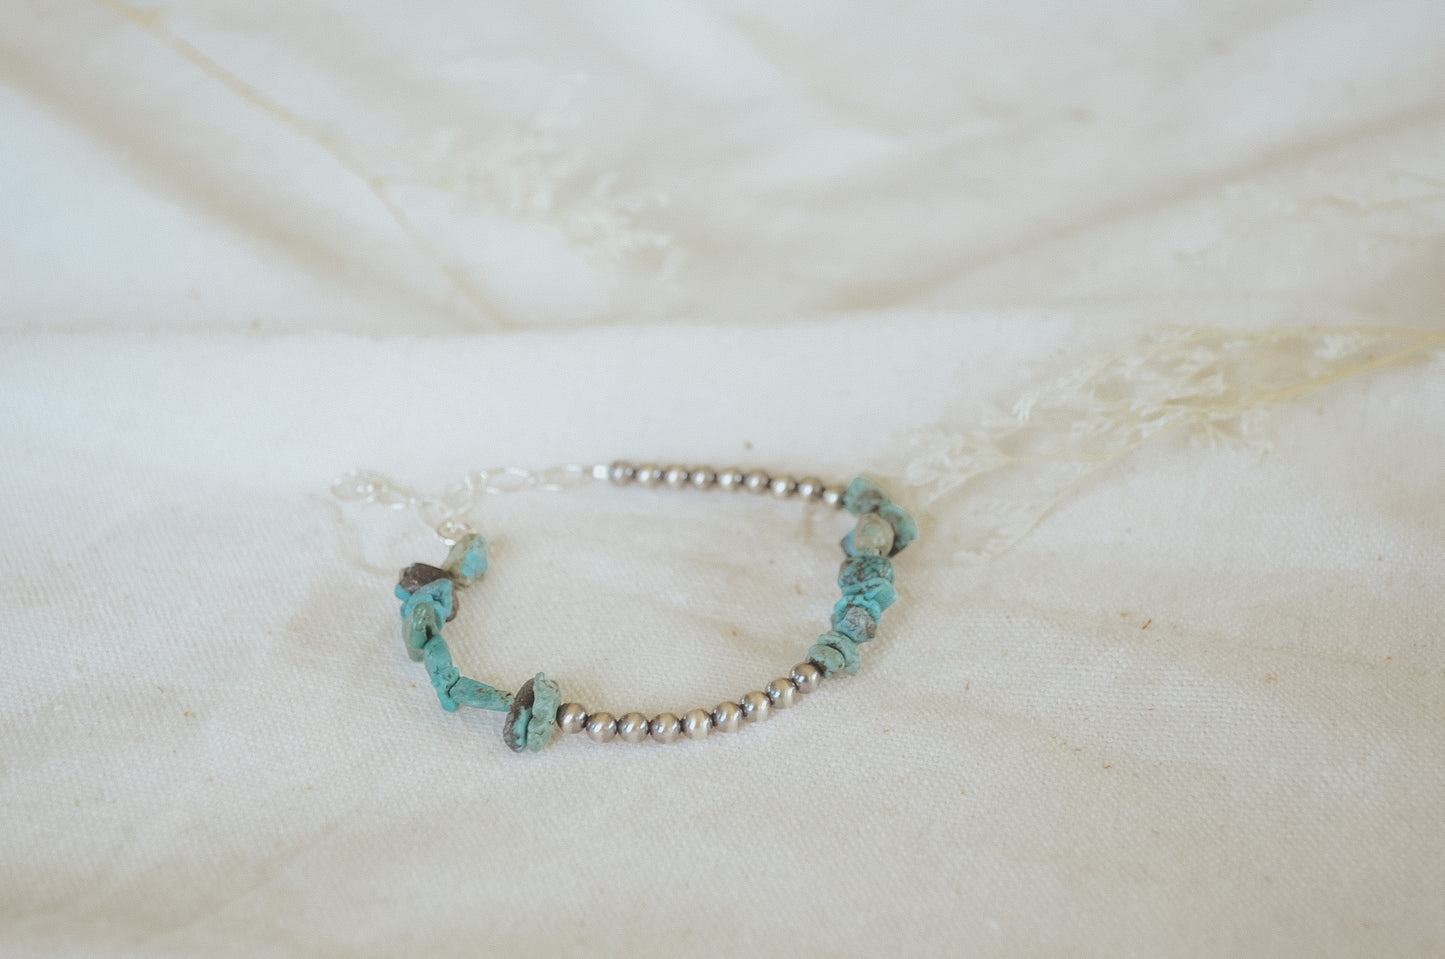 P - The Navajo + Turquoise Bracelets